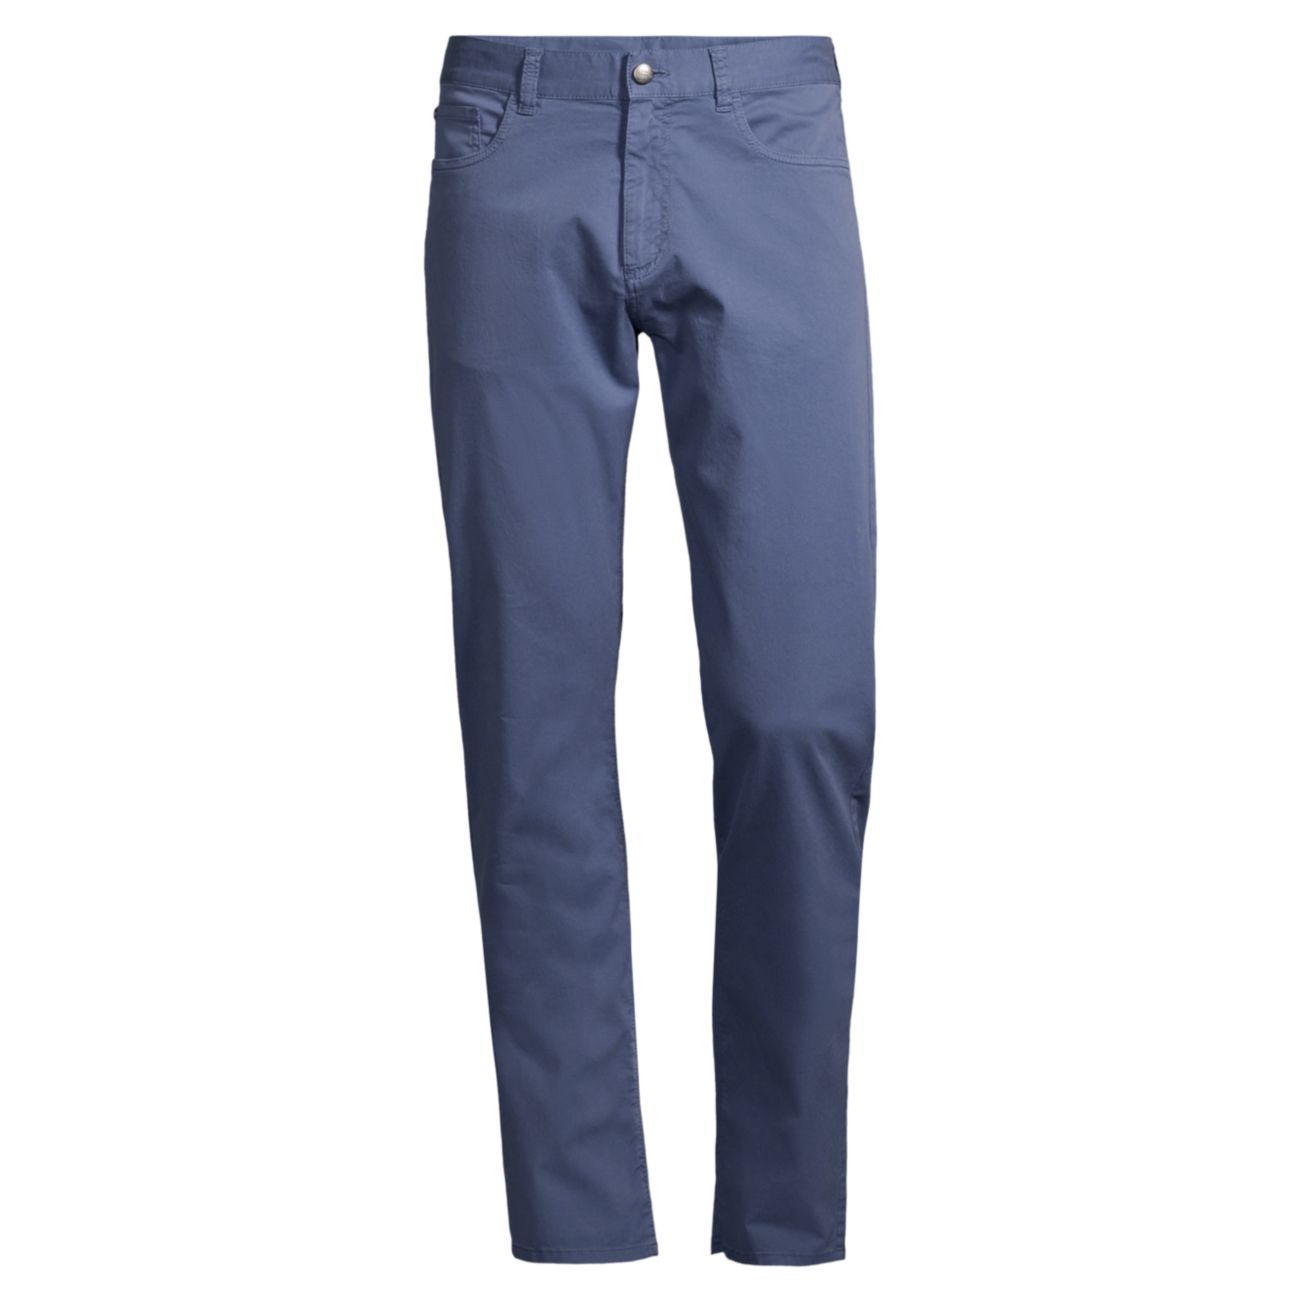 Комфортные эластичные джинсы стандартного кроя Microtwill Canali